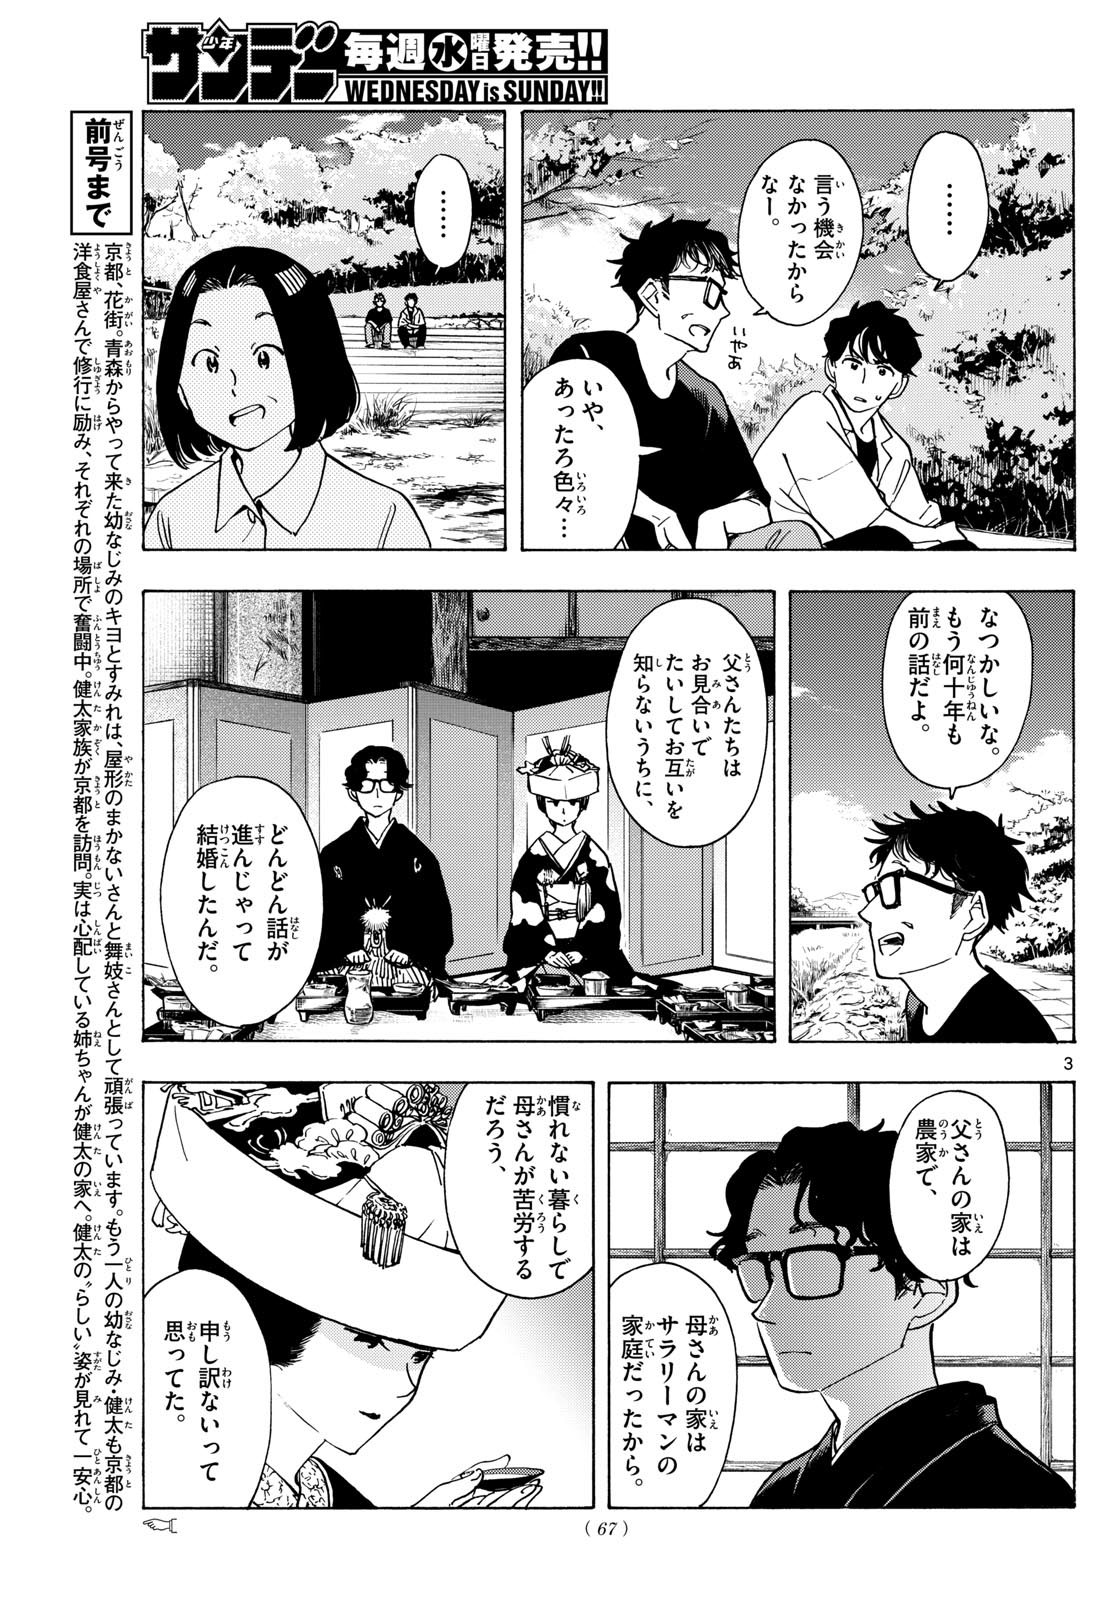 Maiko-san Chi no Makanai-san - Chapter 307 - Page 3